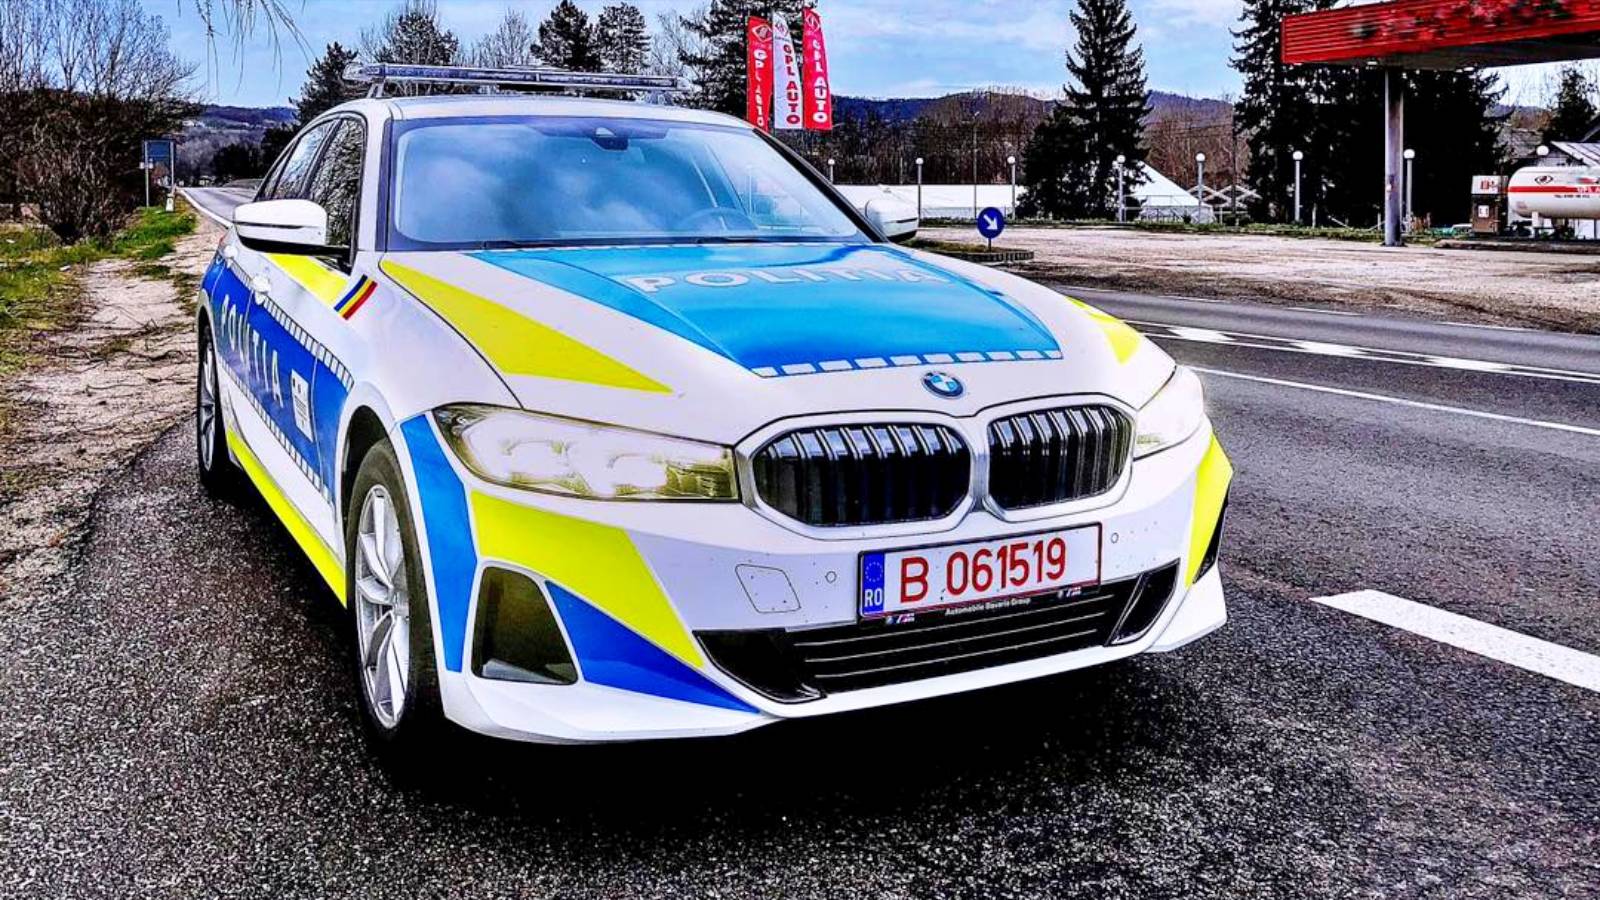 Centrul INFO Trafic Politia AVERTIZEAZA Soferii Toata Romania